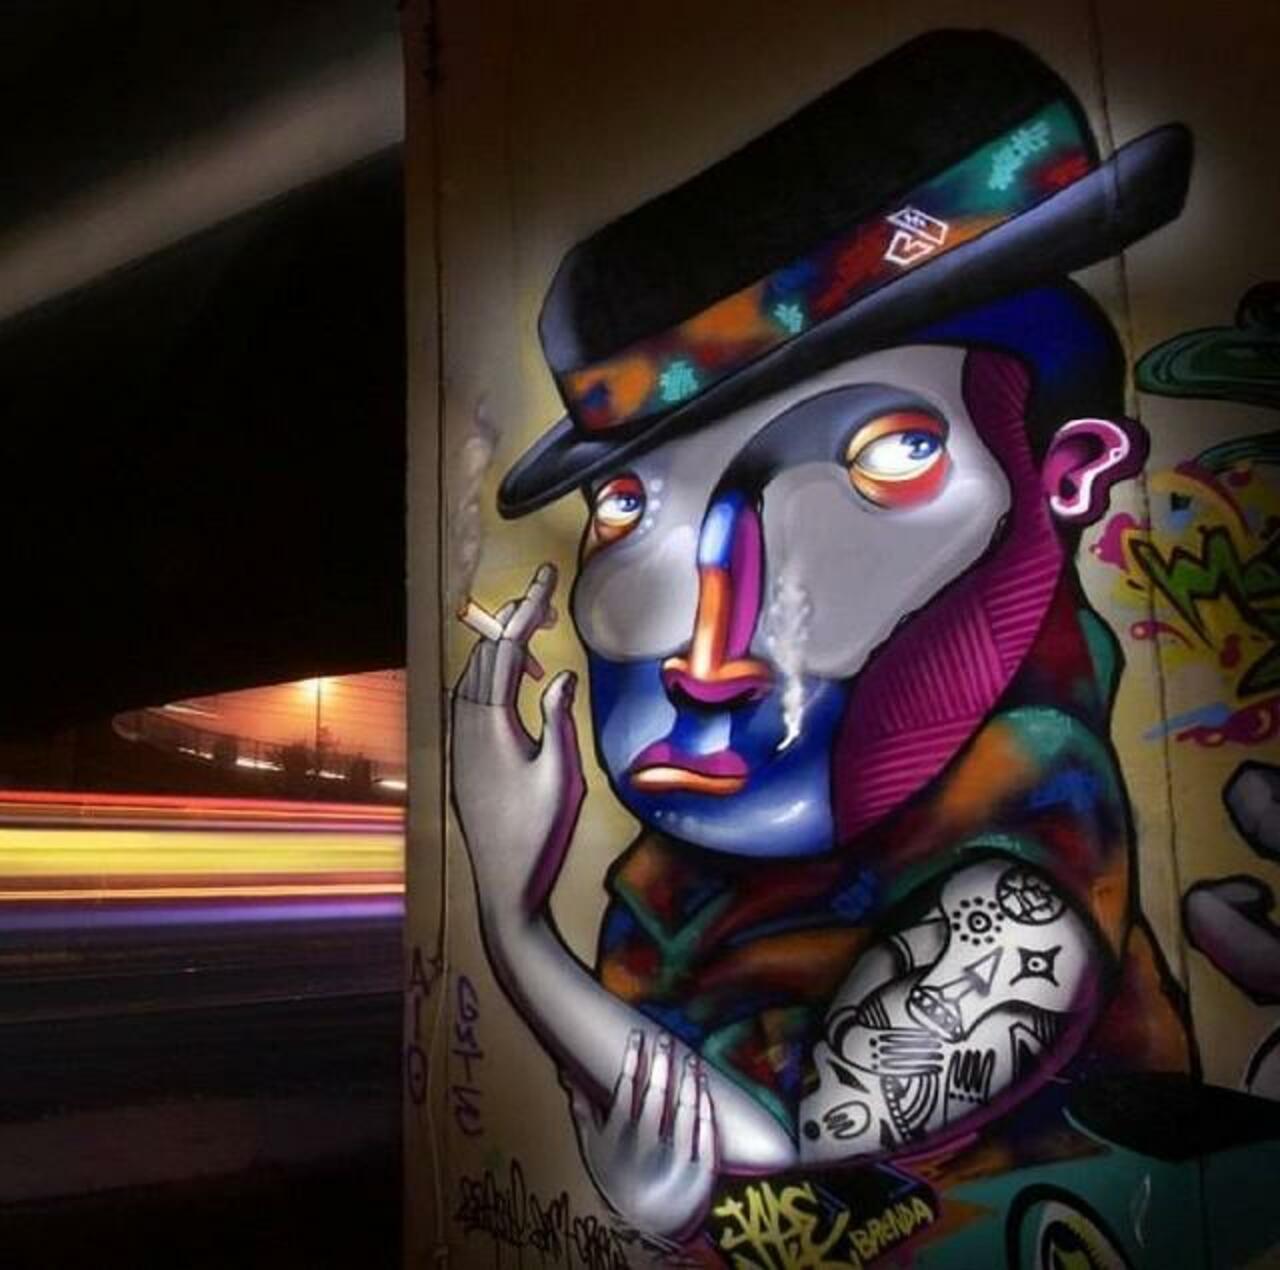 "@GoogleStreetArt: Abstract Street Art by Jade Rivera #art #mural #graffiti #streetart http://t.co/r5PlXAwOSw"